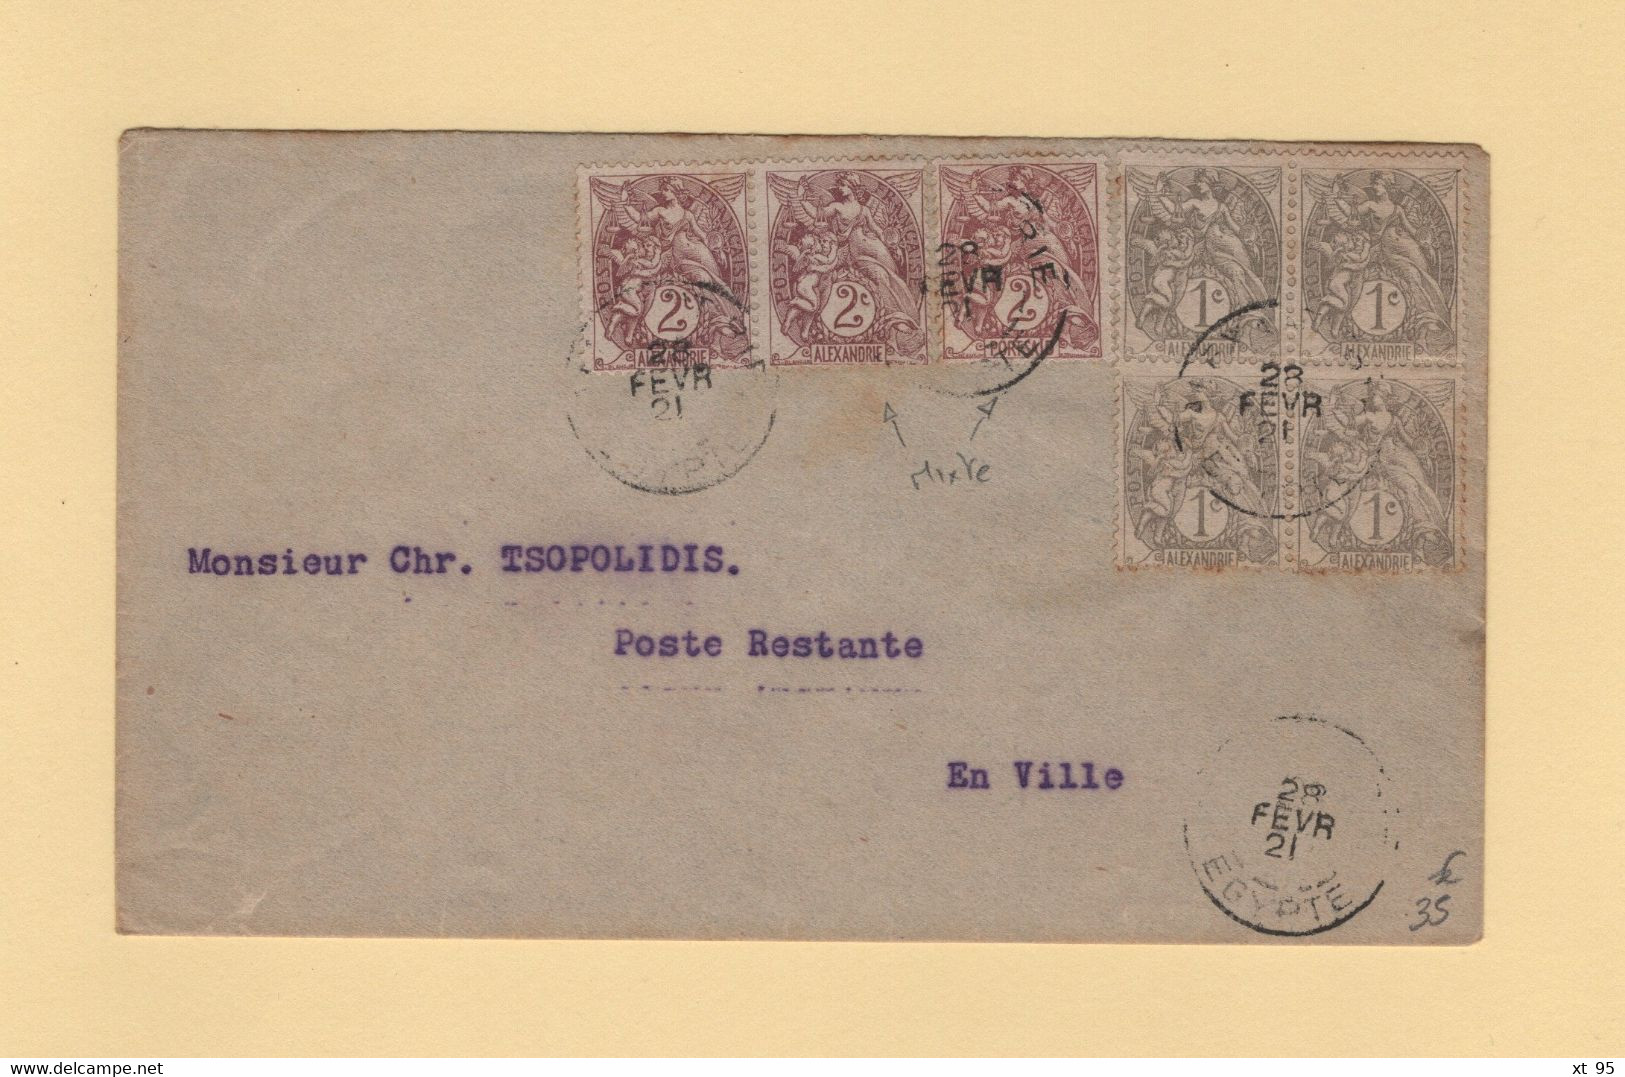 Alexandrie - Egypte - 28 Fevrier 1921 - Affranchissement Mixte Port Said Alexandrie - Type Blanc - Storia Postale